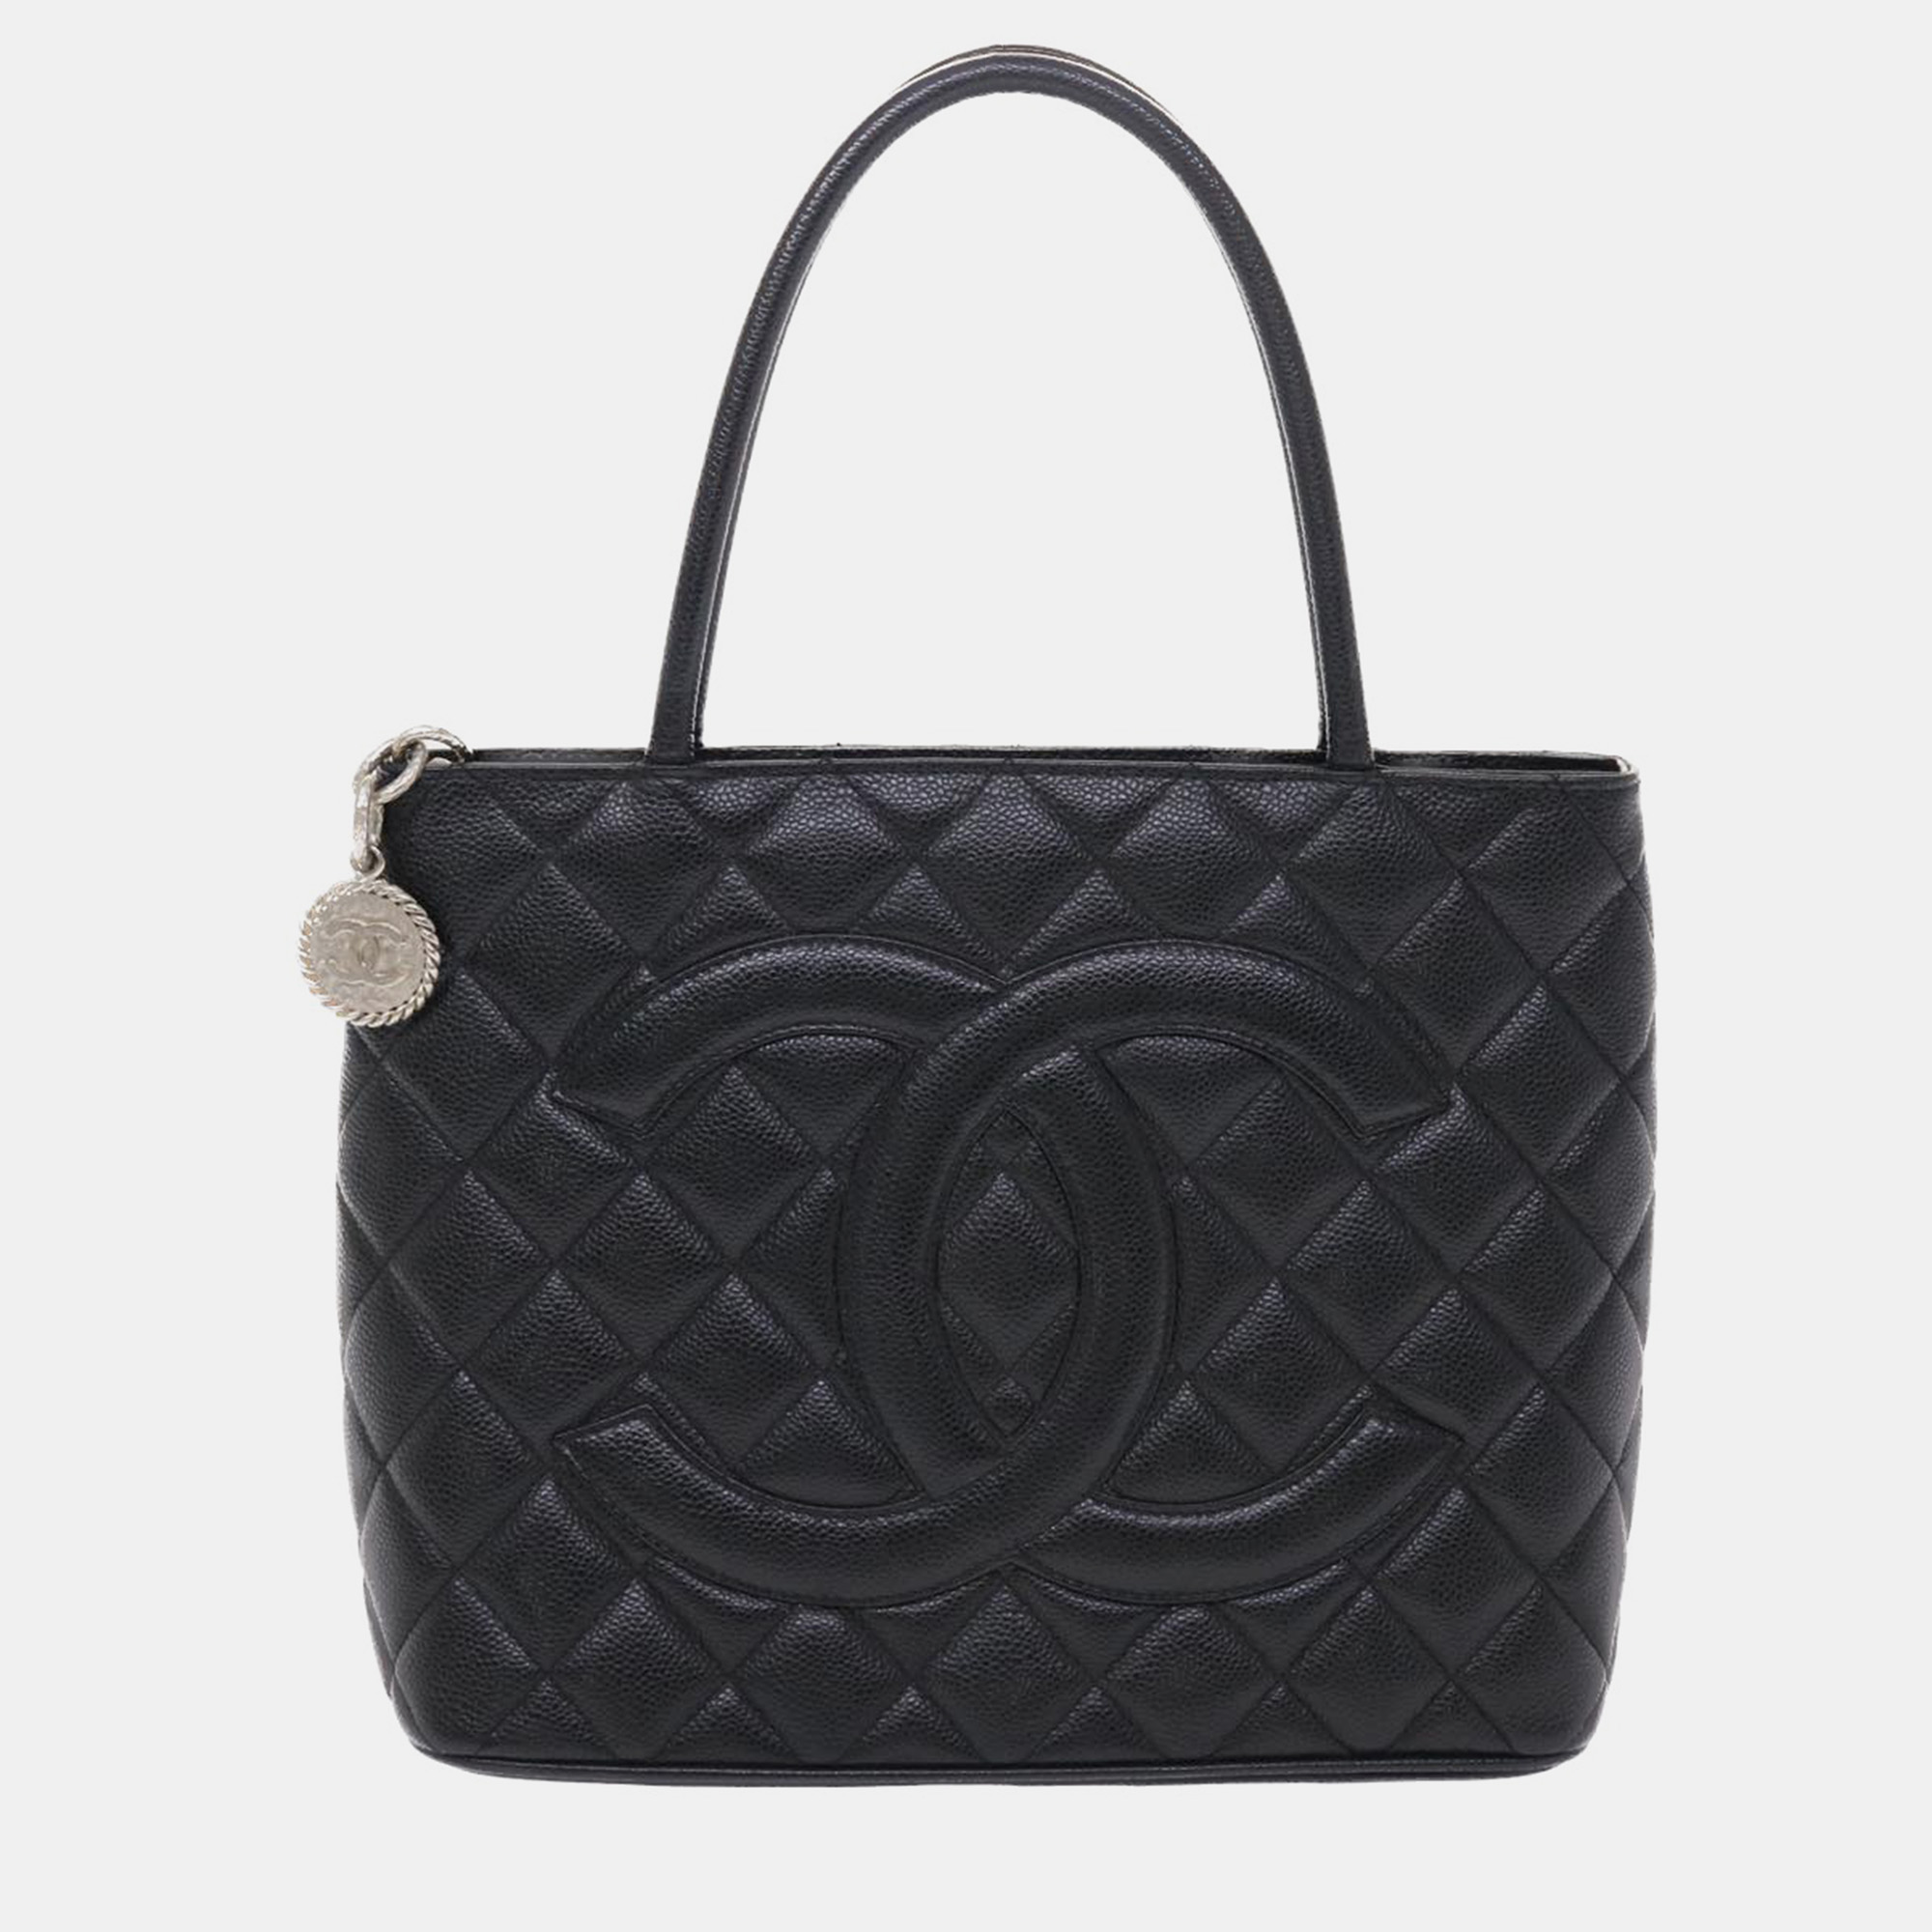 Chanel Black Leather Medallion Tote Bag